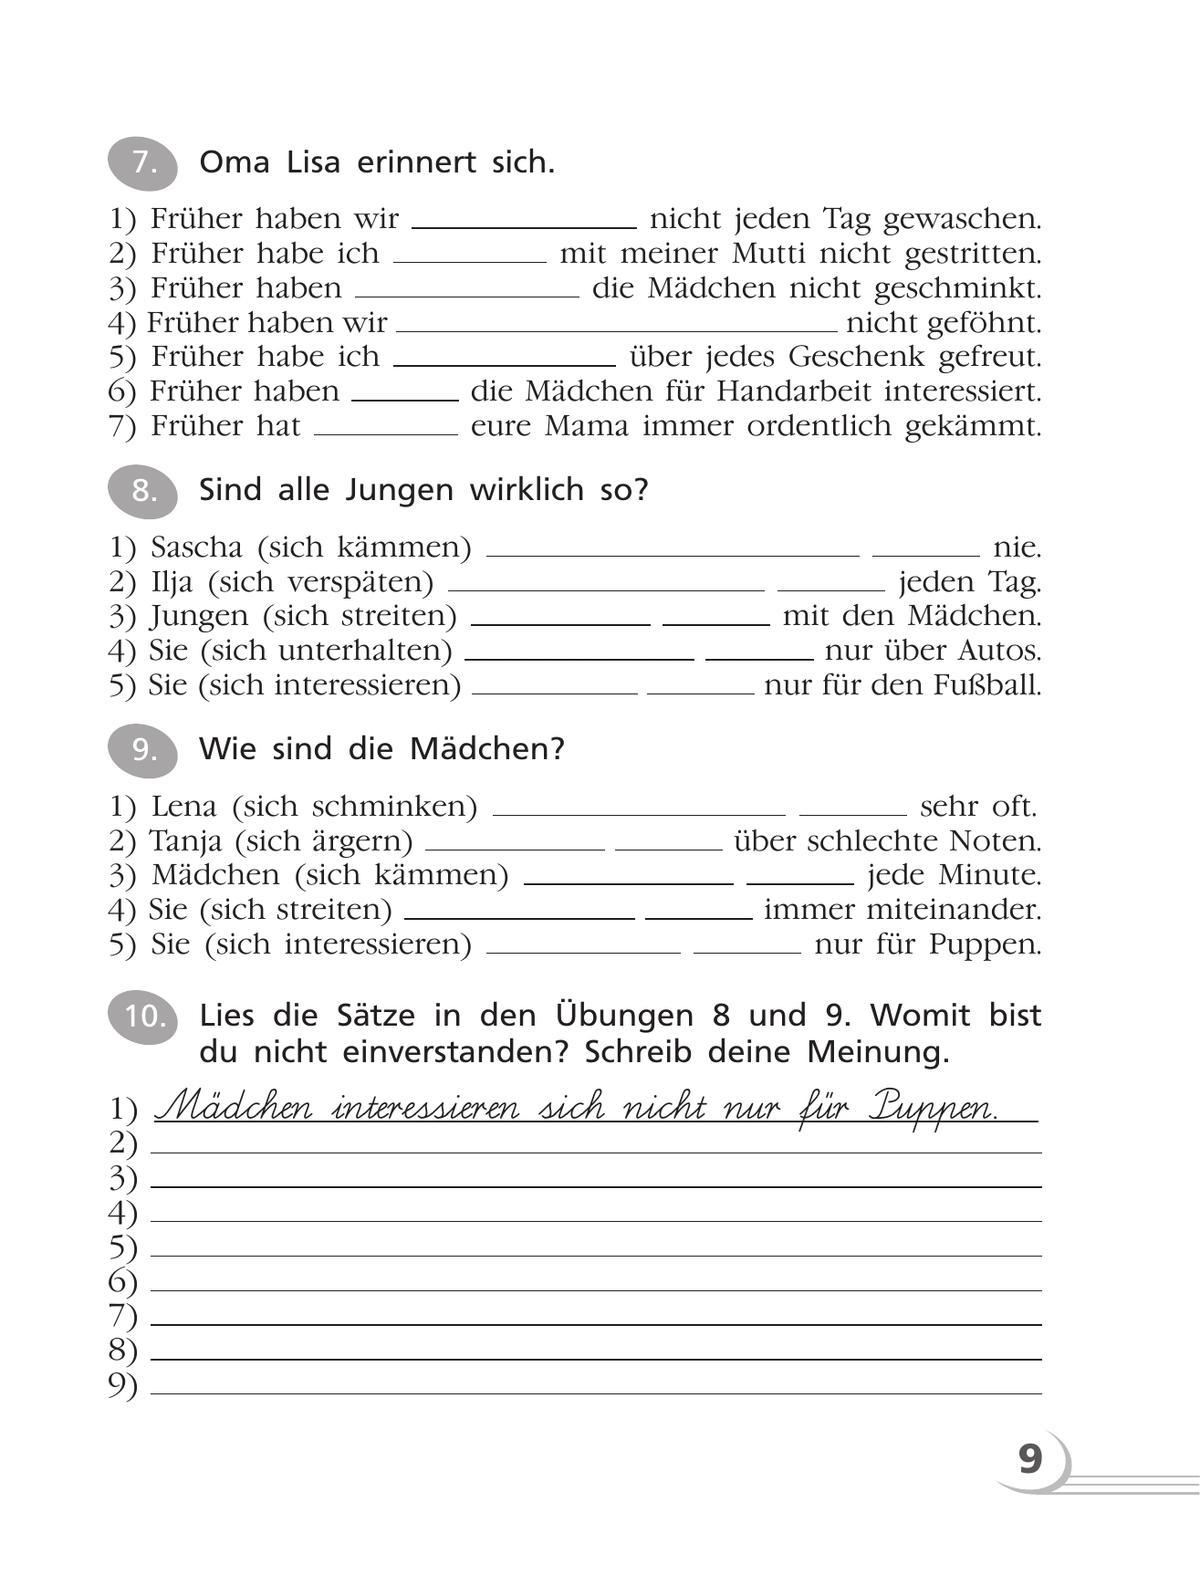 Немецкий язык. Грамматический тренажер. 5-6 классы 10